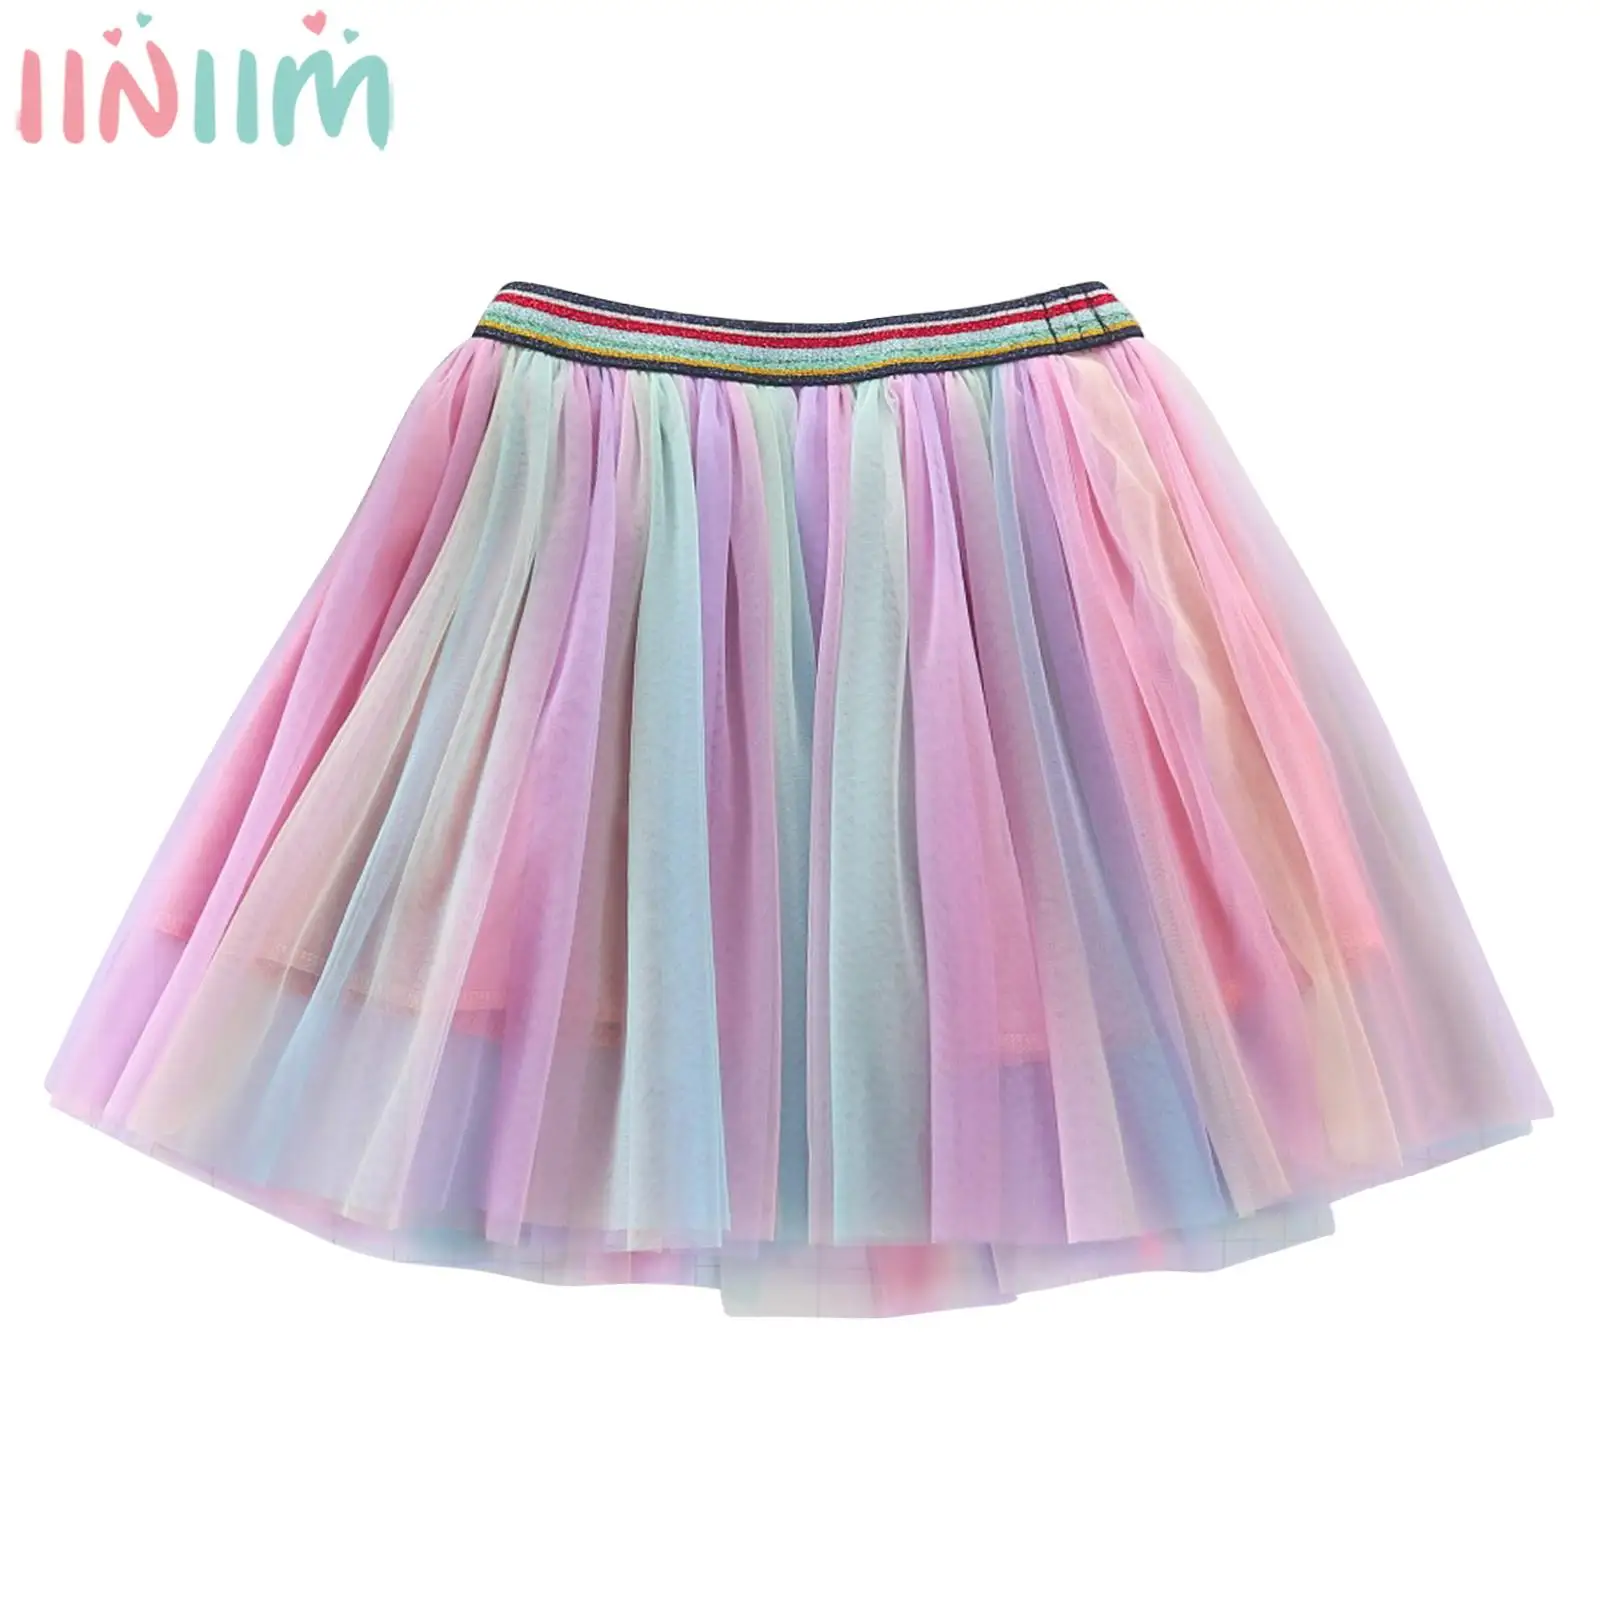 

Baby Girls Cute Rainbow Mesh Tutu Elastic Waistband All-match Layered Skirt for Birthday Party Daily Wear Photography Dancewear